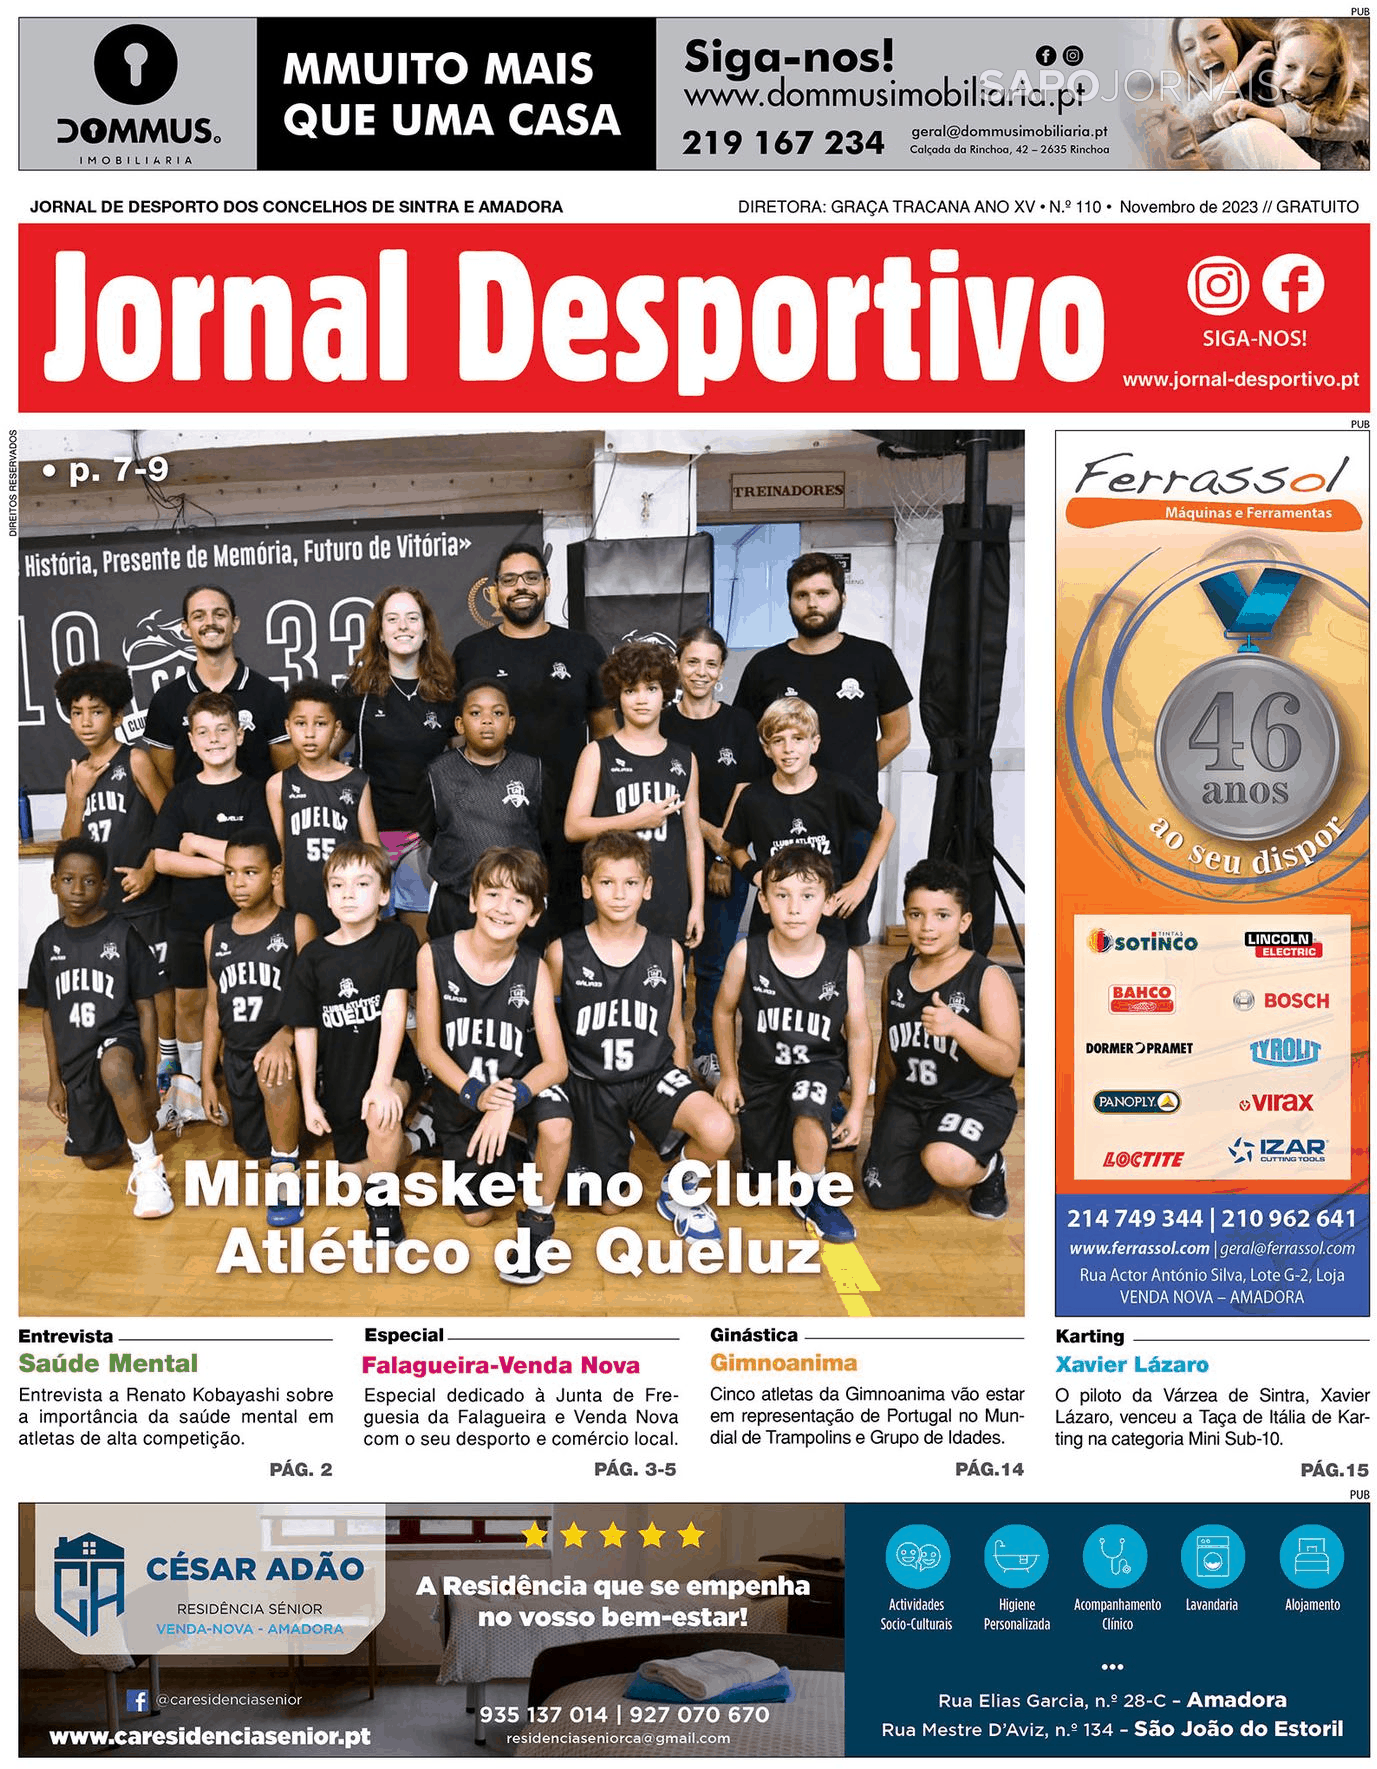 Jornal Desportivo